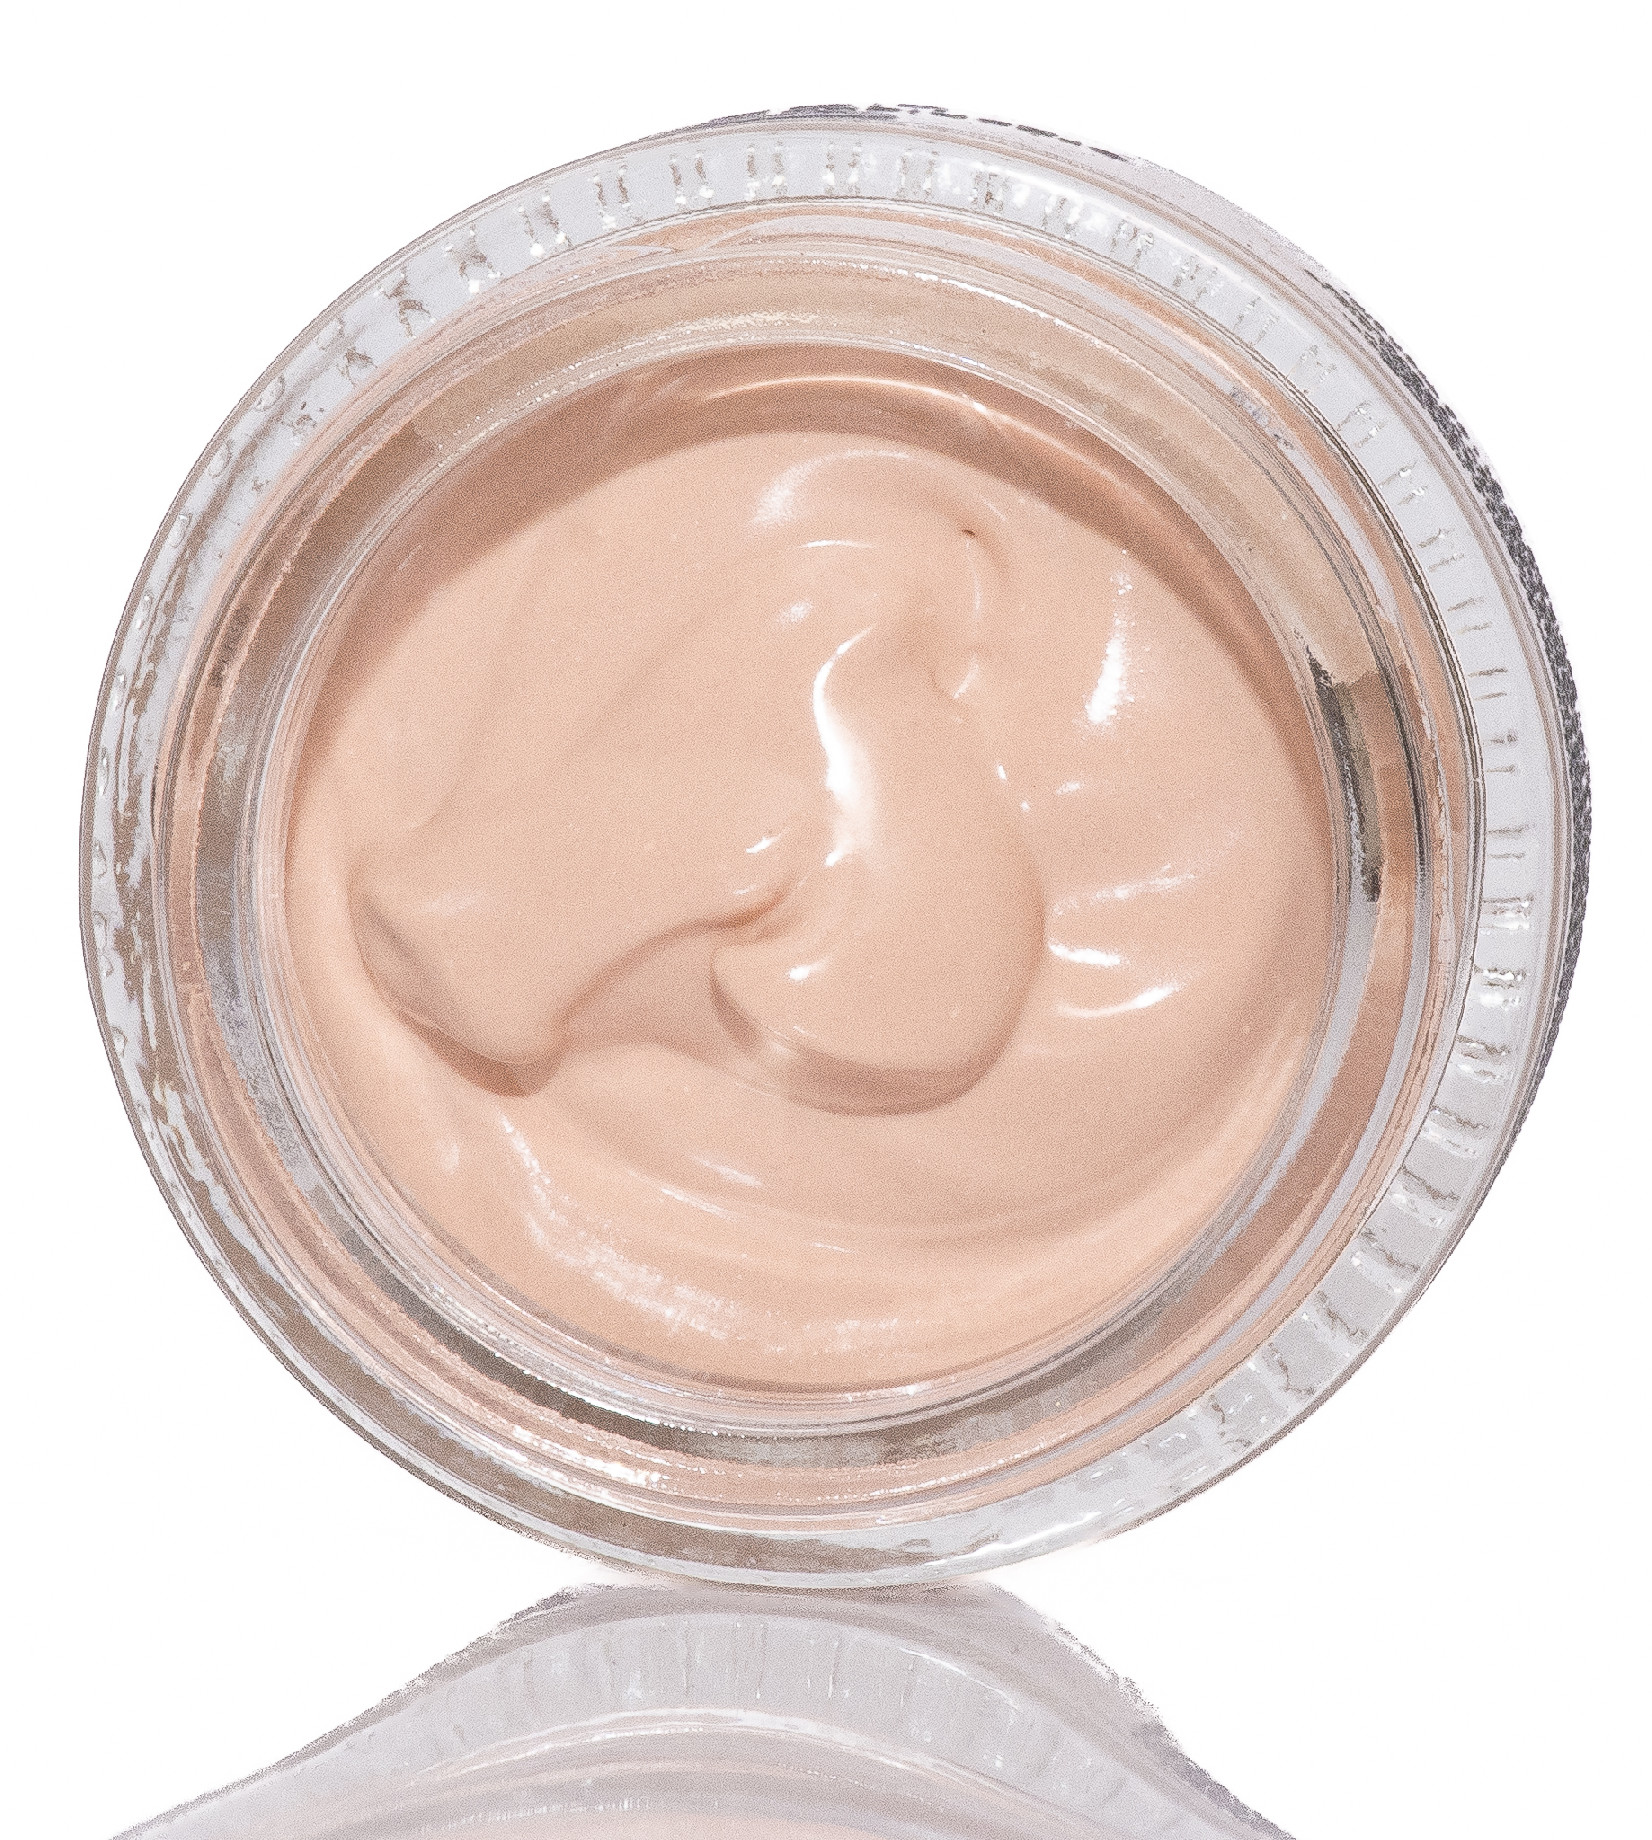 Organický make-up s vitamínom C a Acmellou 30ml Odtieň: LIGHT